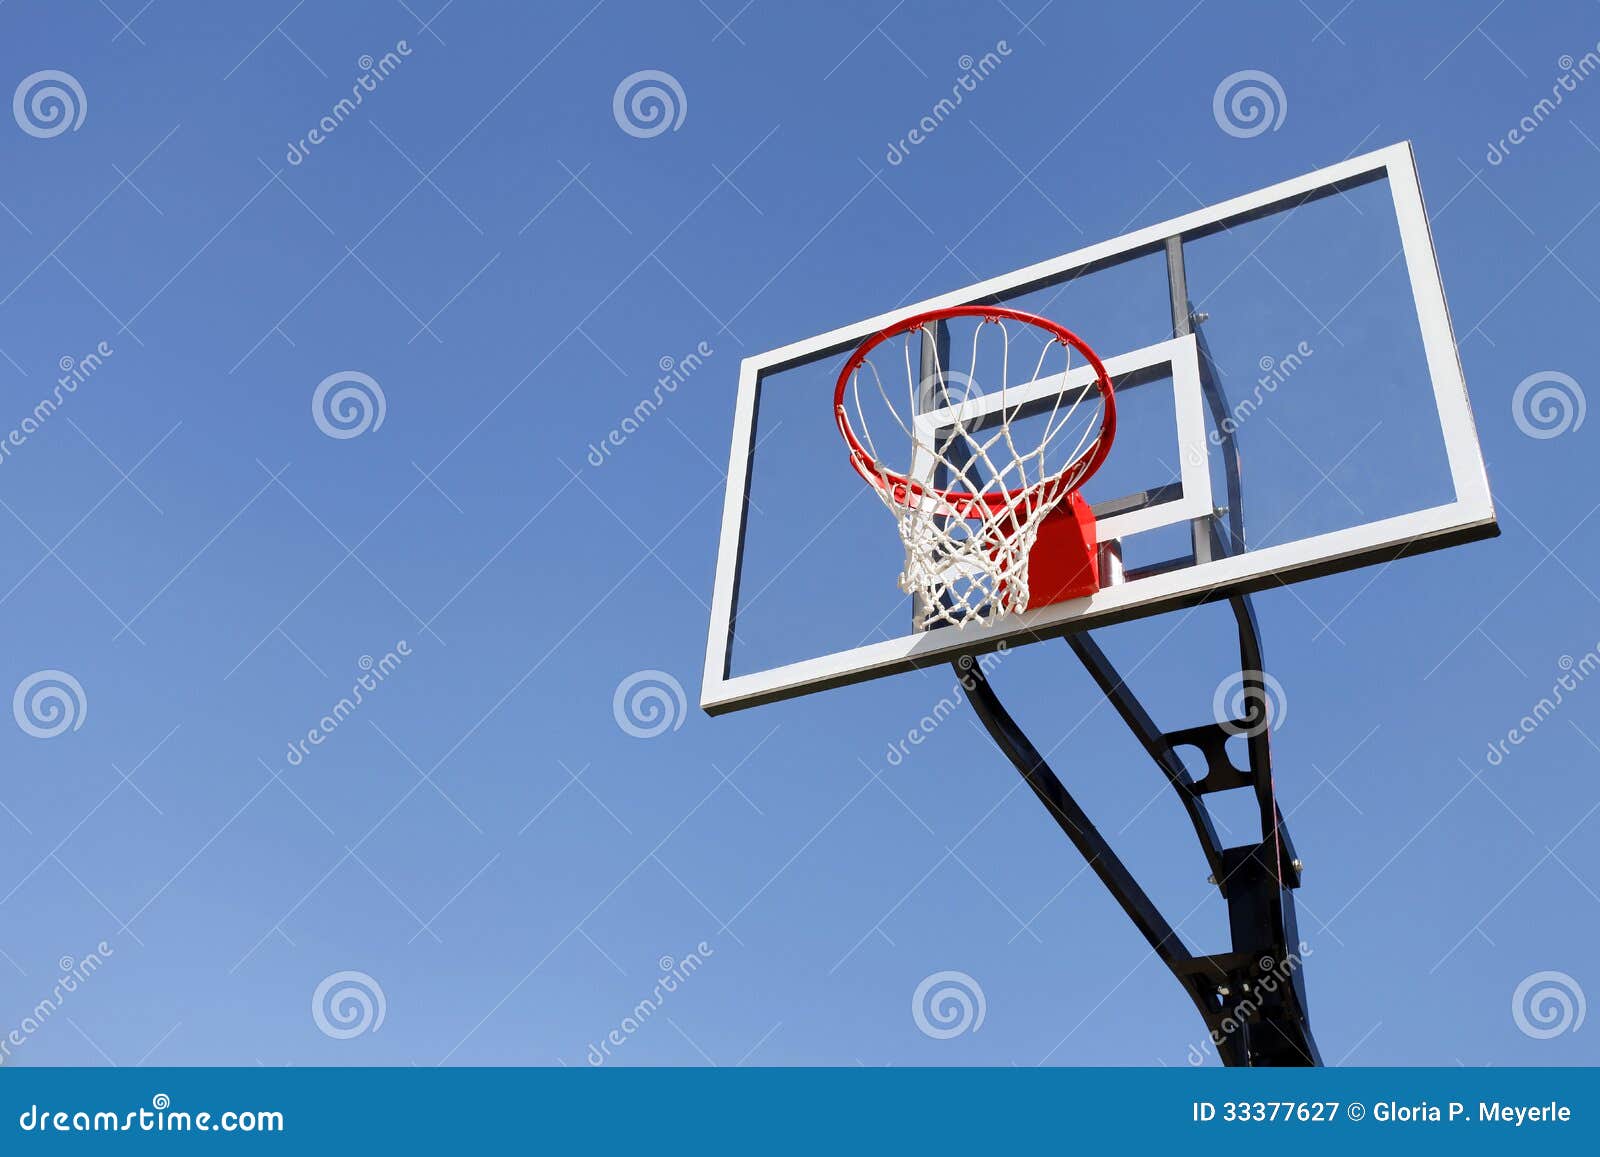 basketball hoop and backboard against blue sky